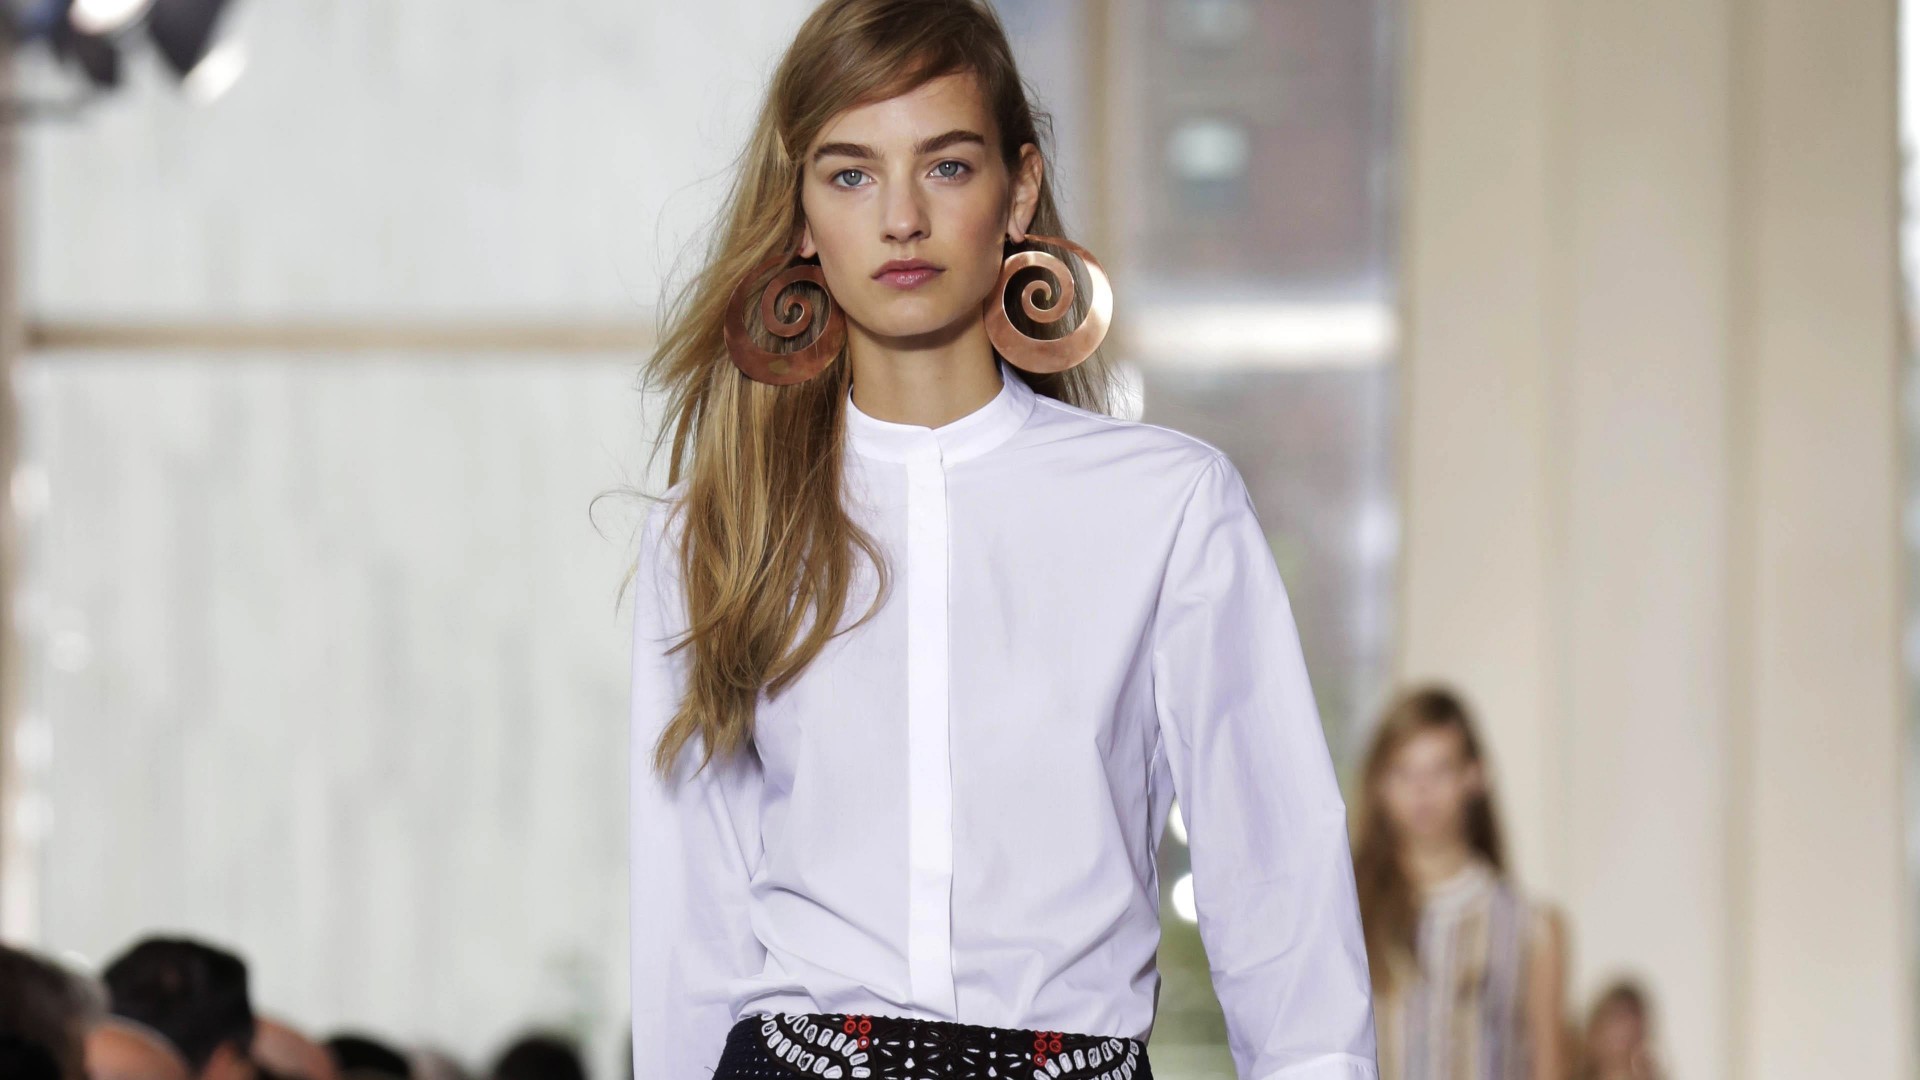 Maartje Verhoef, model, spring 2015 top models, fashion show, white shirt (horizontal)